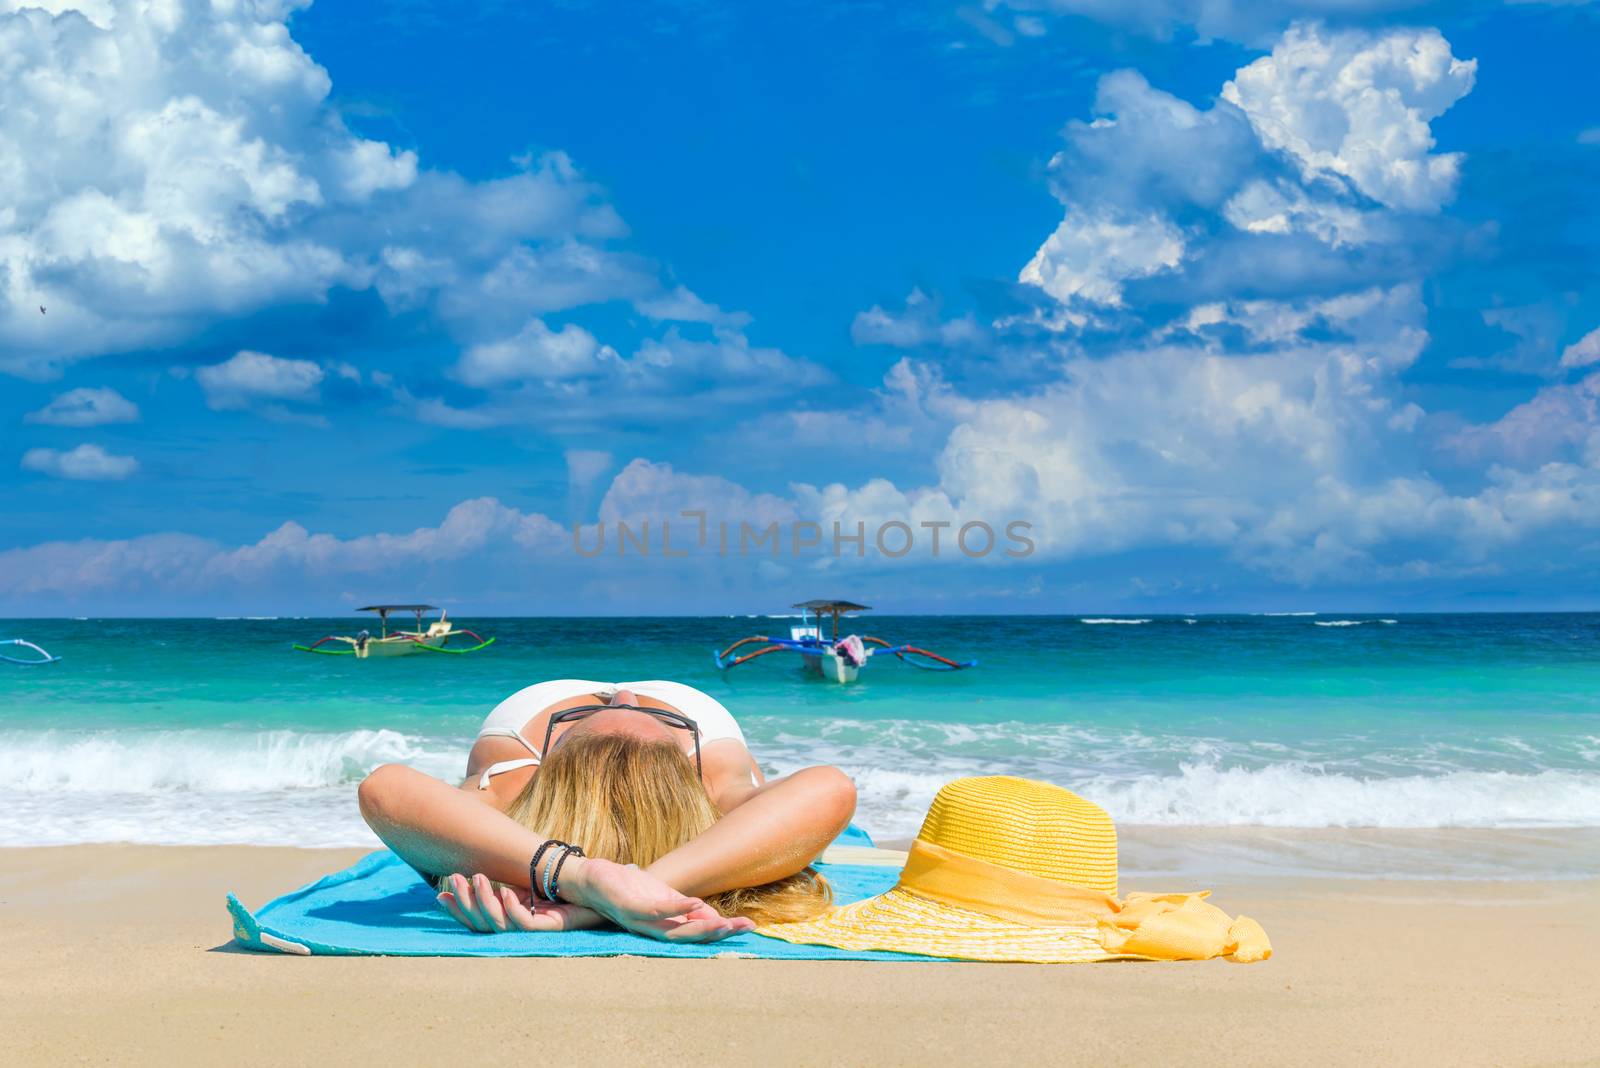 Woman in yellow bikini lying on tropical beach by Netfalls